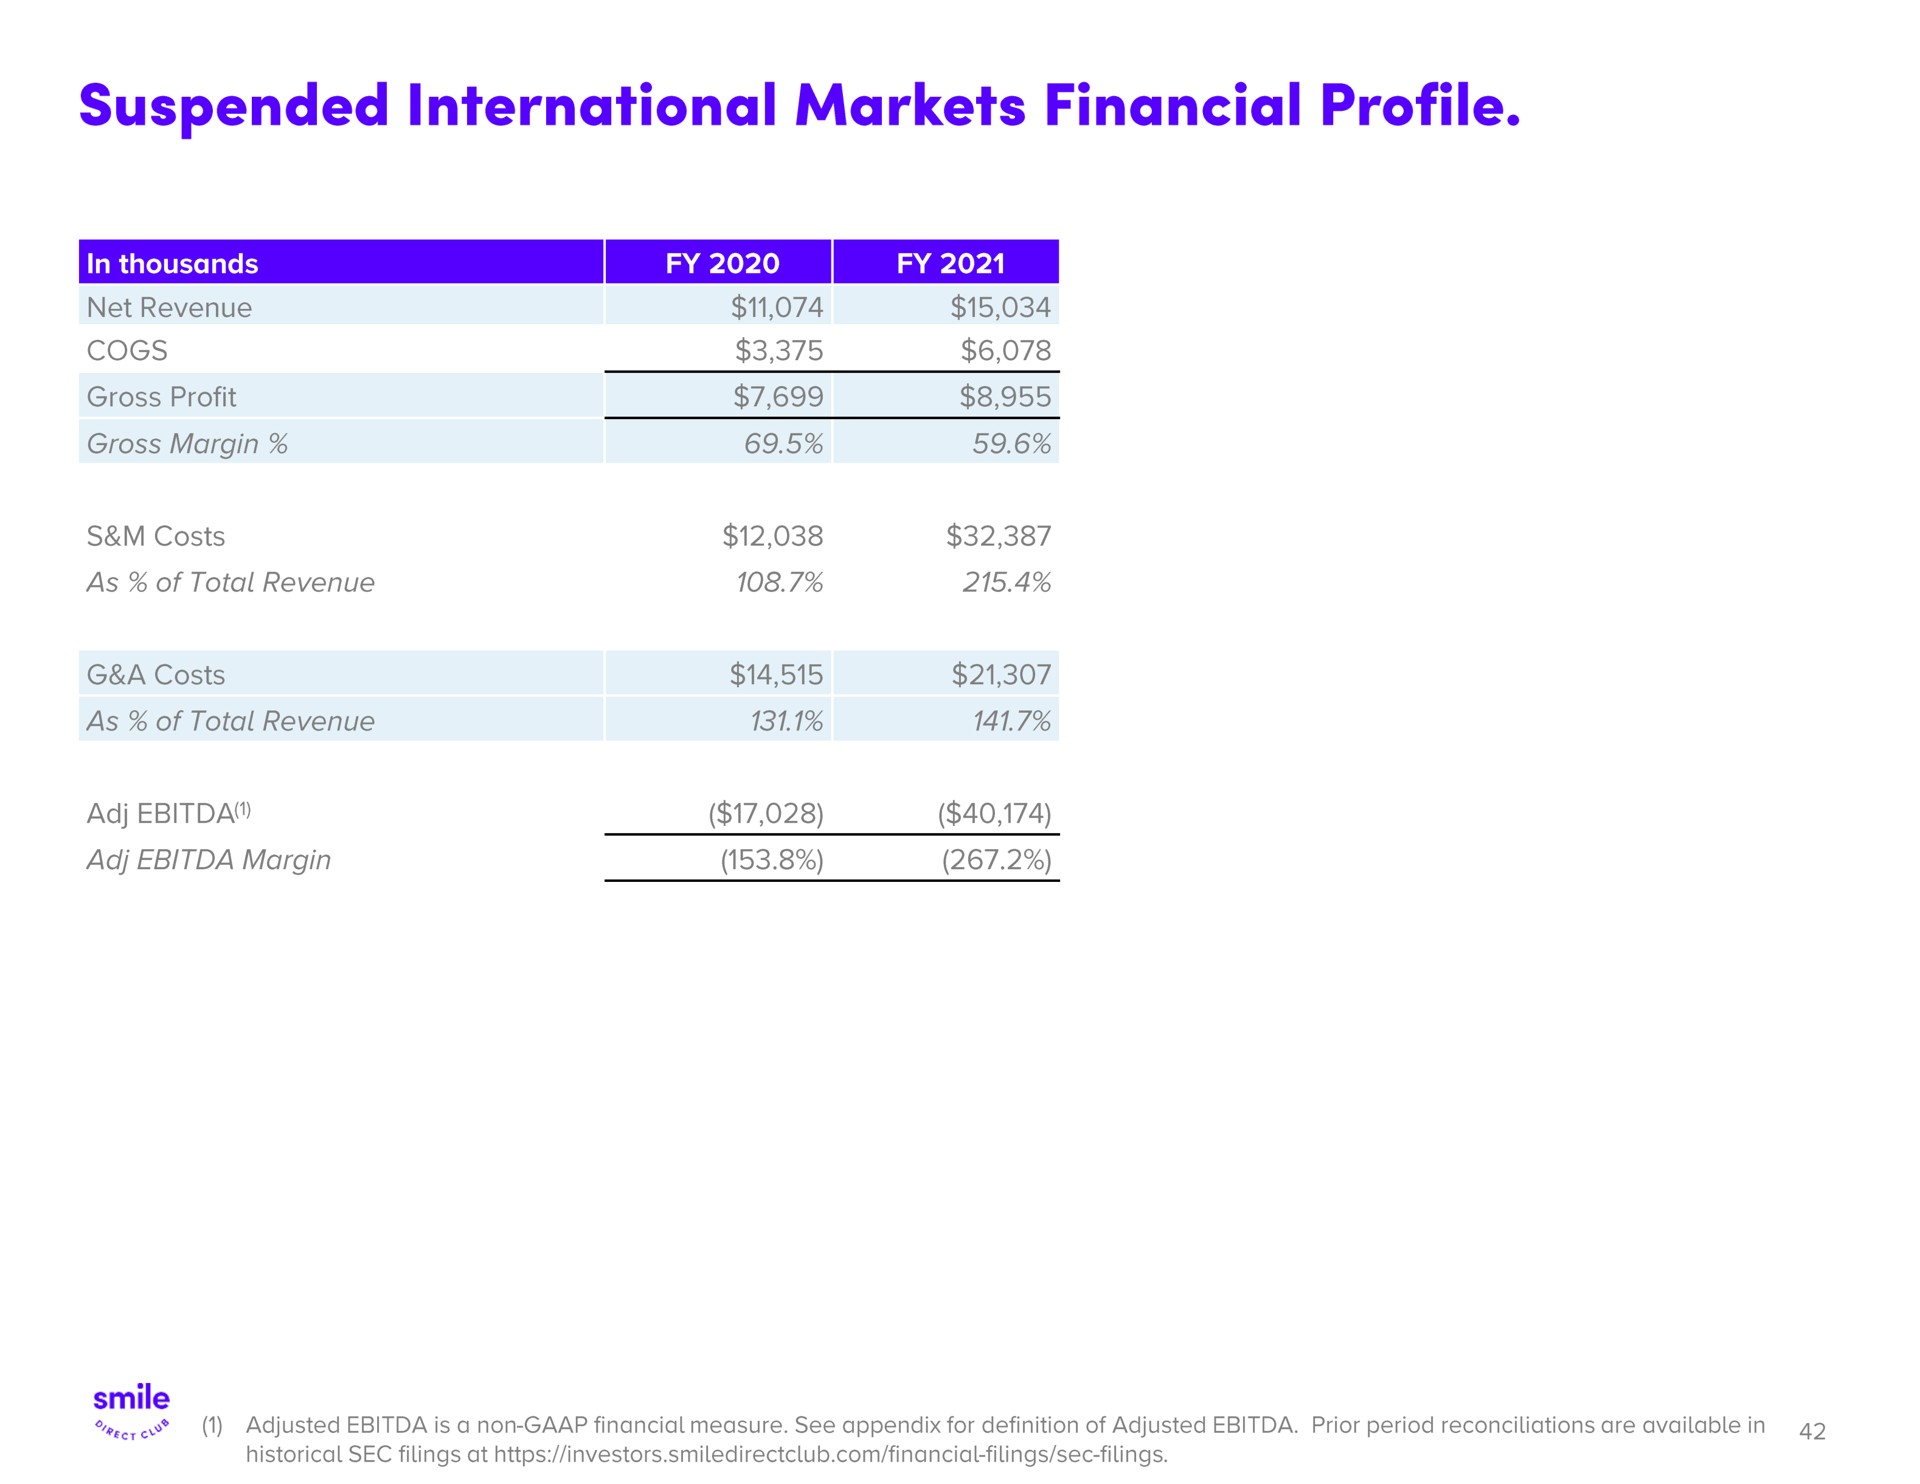 suspended international markets financial profile reit | SmileDirectClub